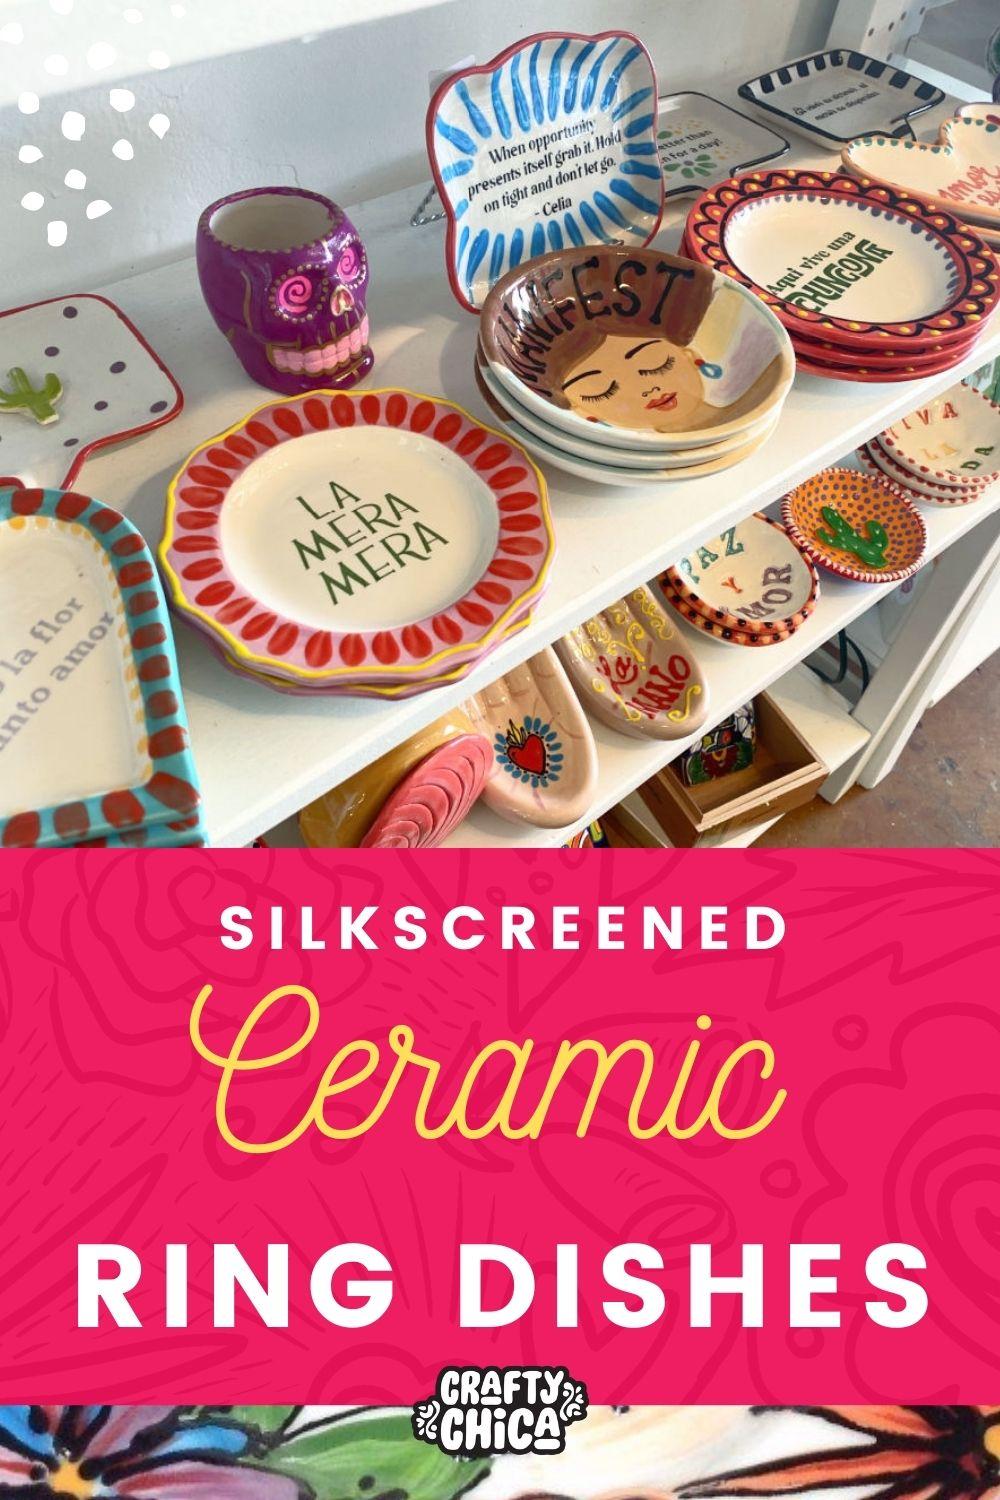 Silkscreen ceramic ring dishes